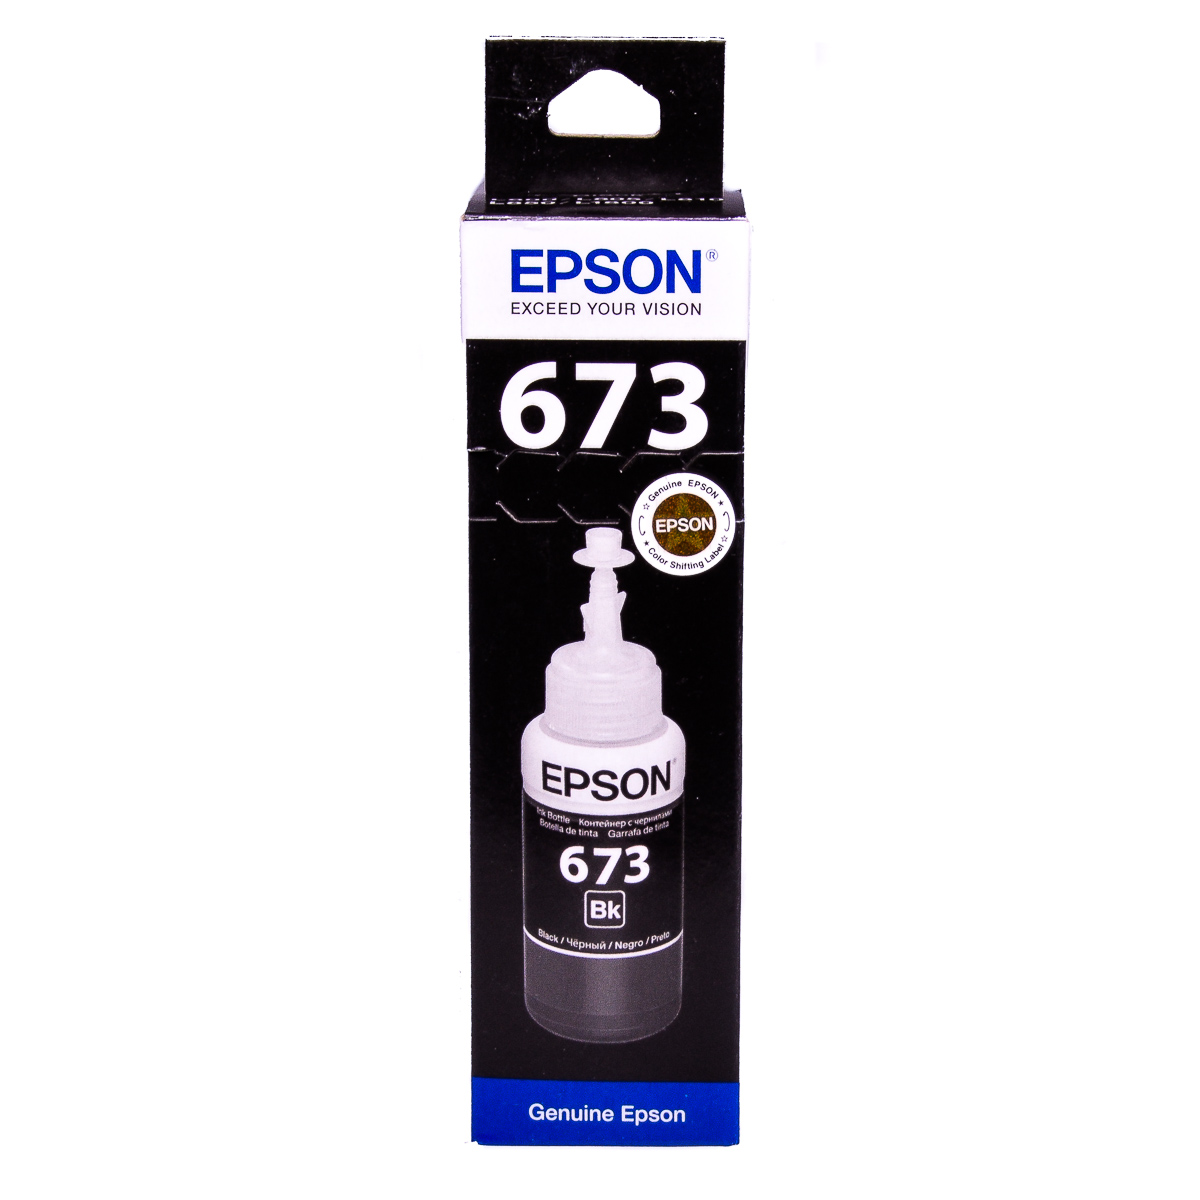 Epson T0801 Black original dye ink refill Replaces Stylus R265